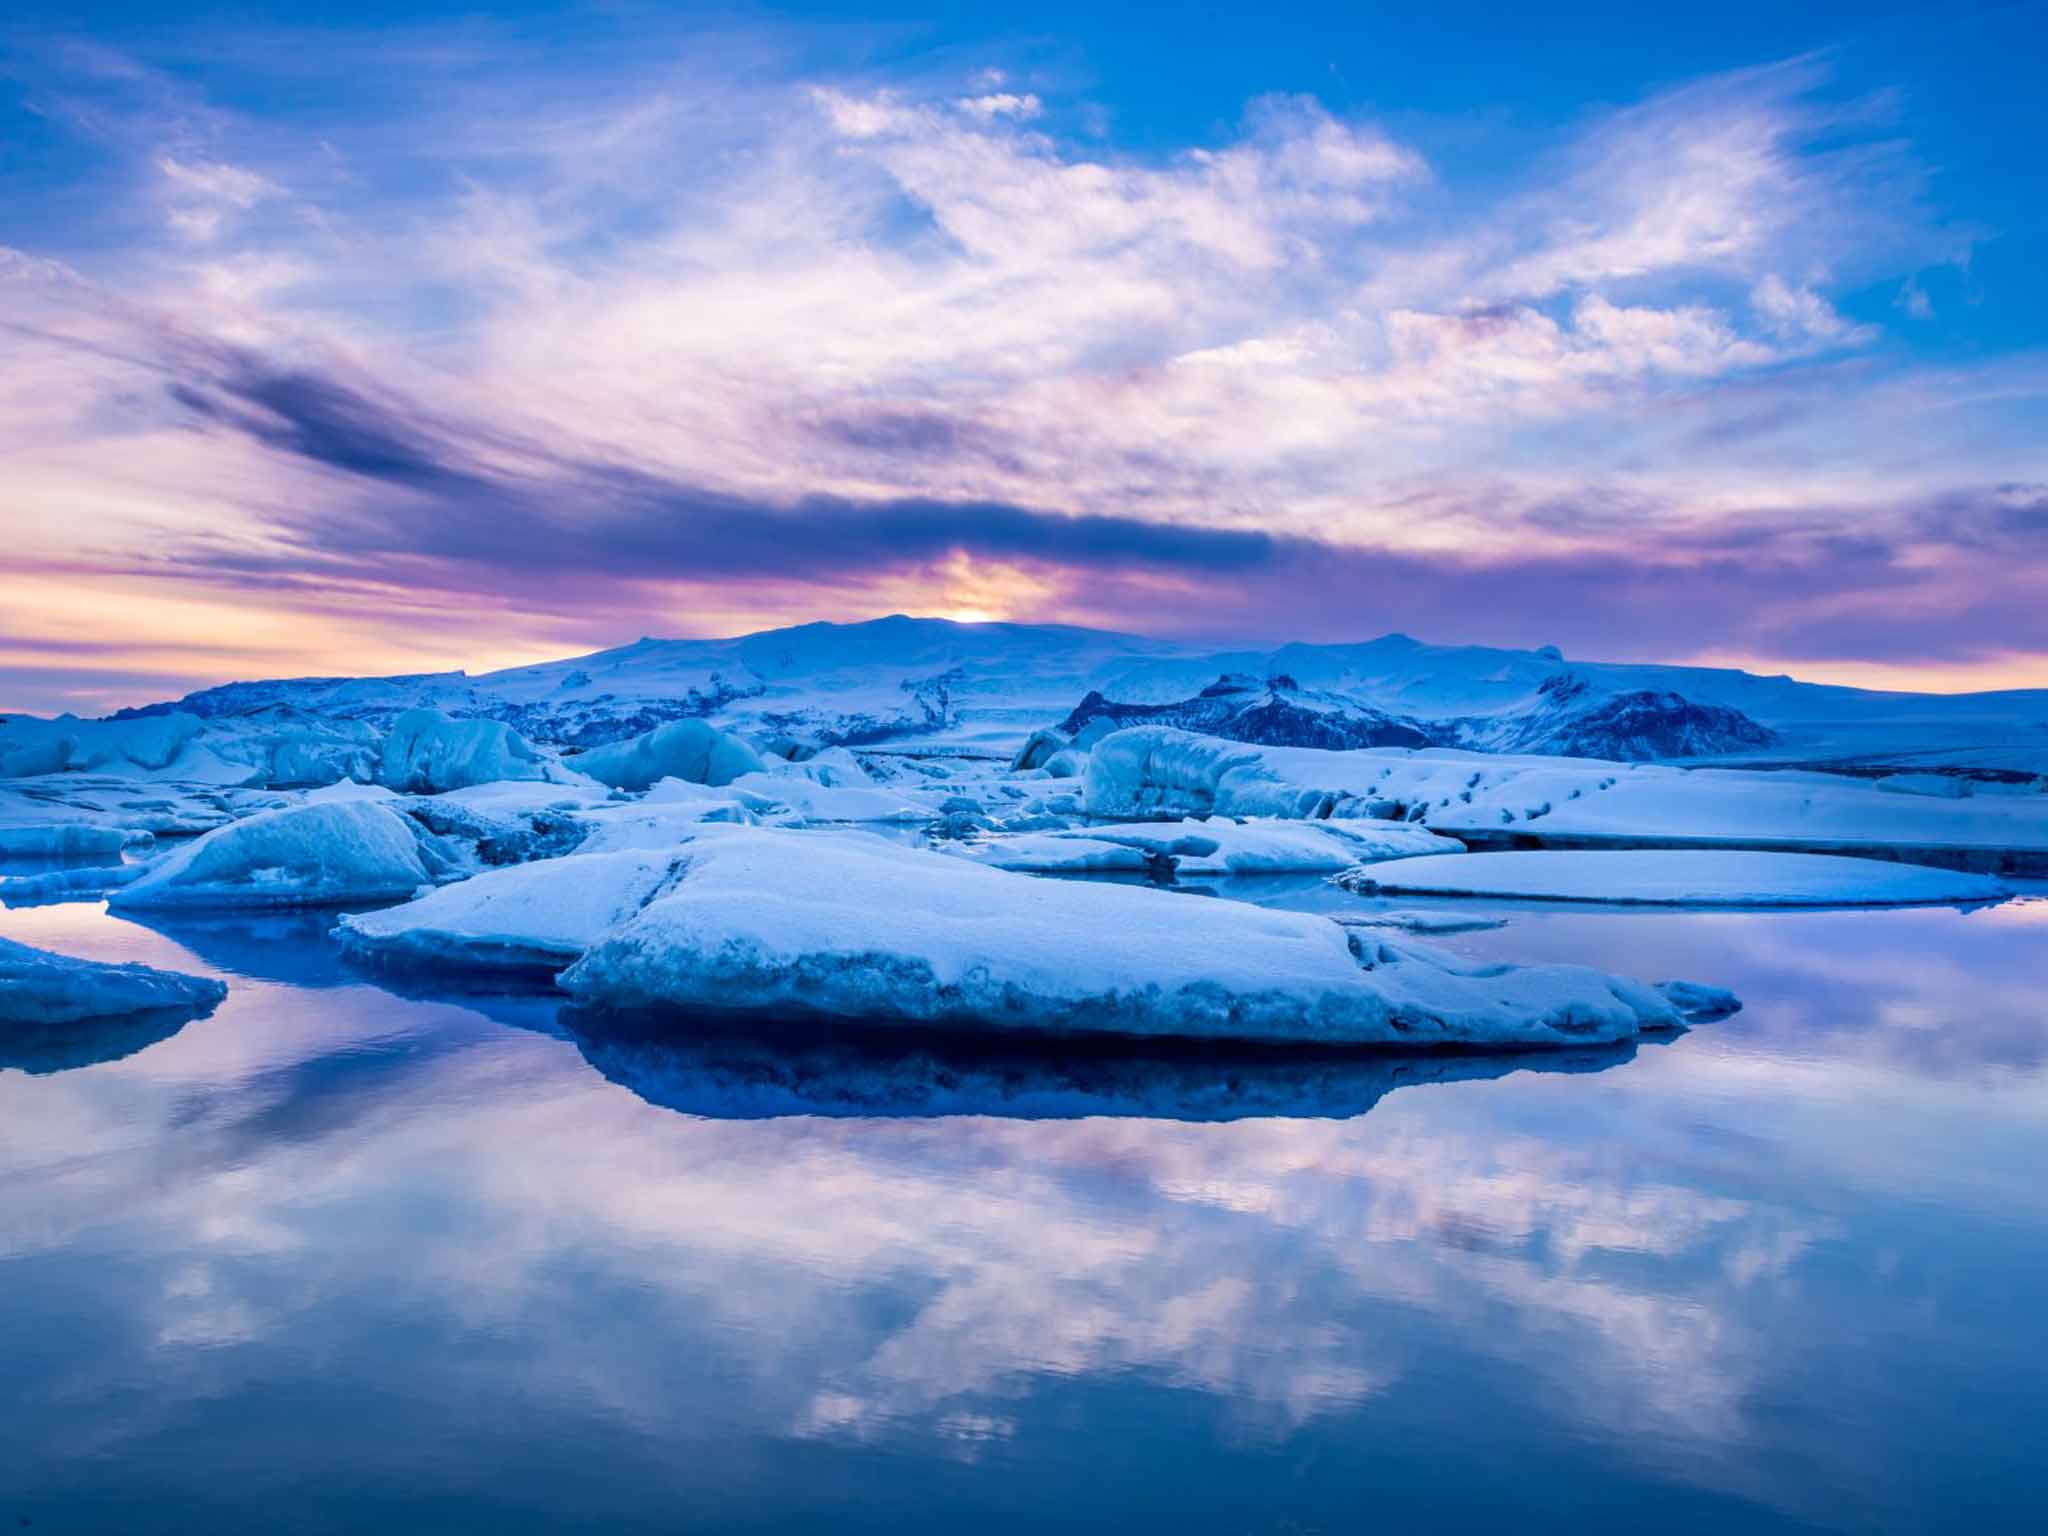 Glacier lagoon in Iceland